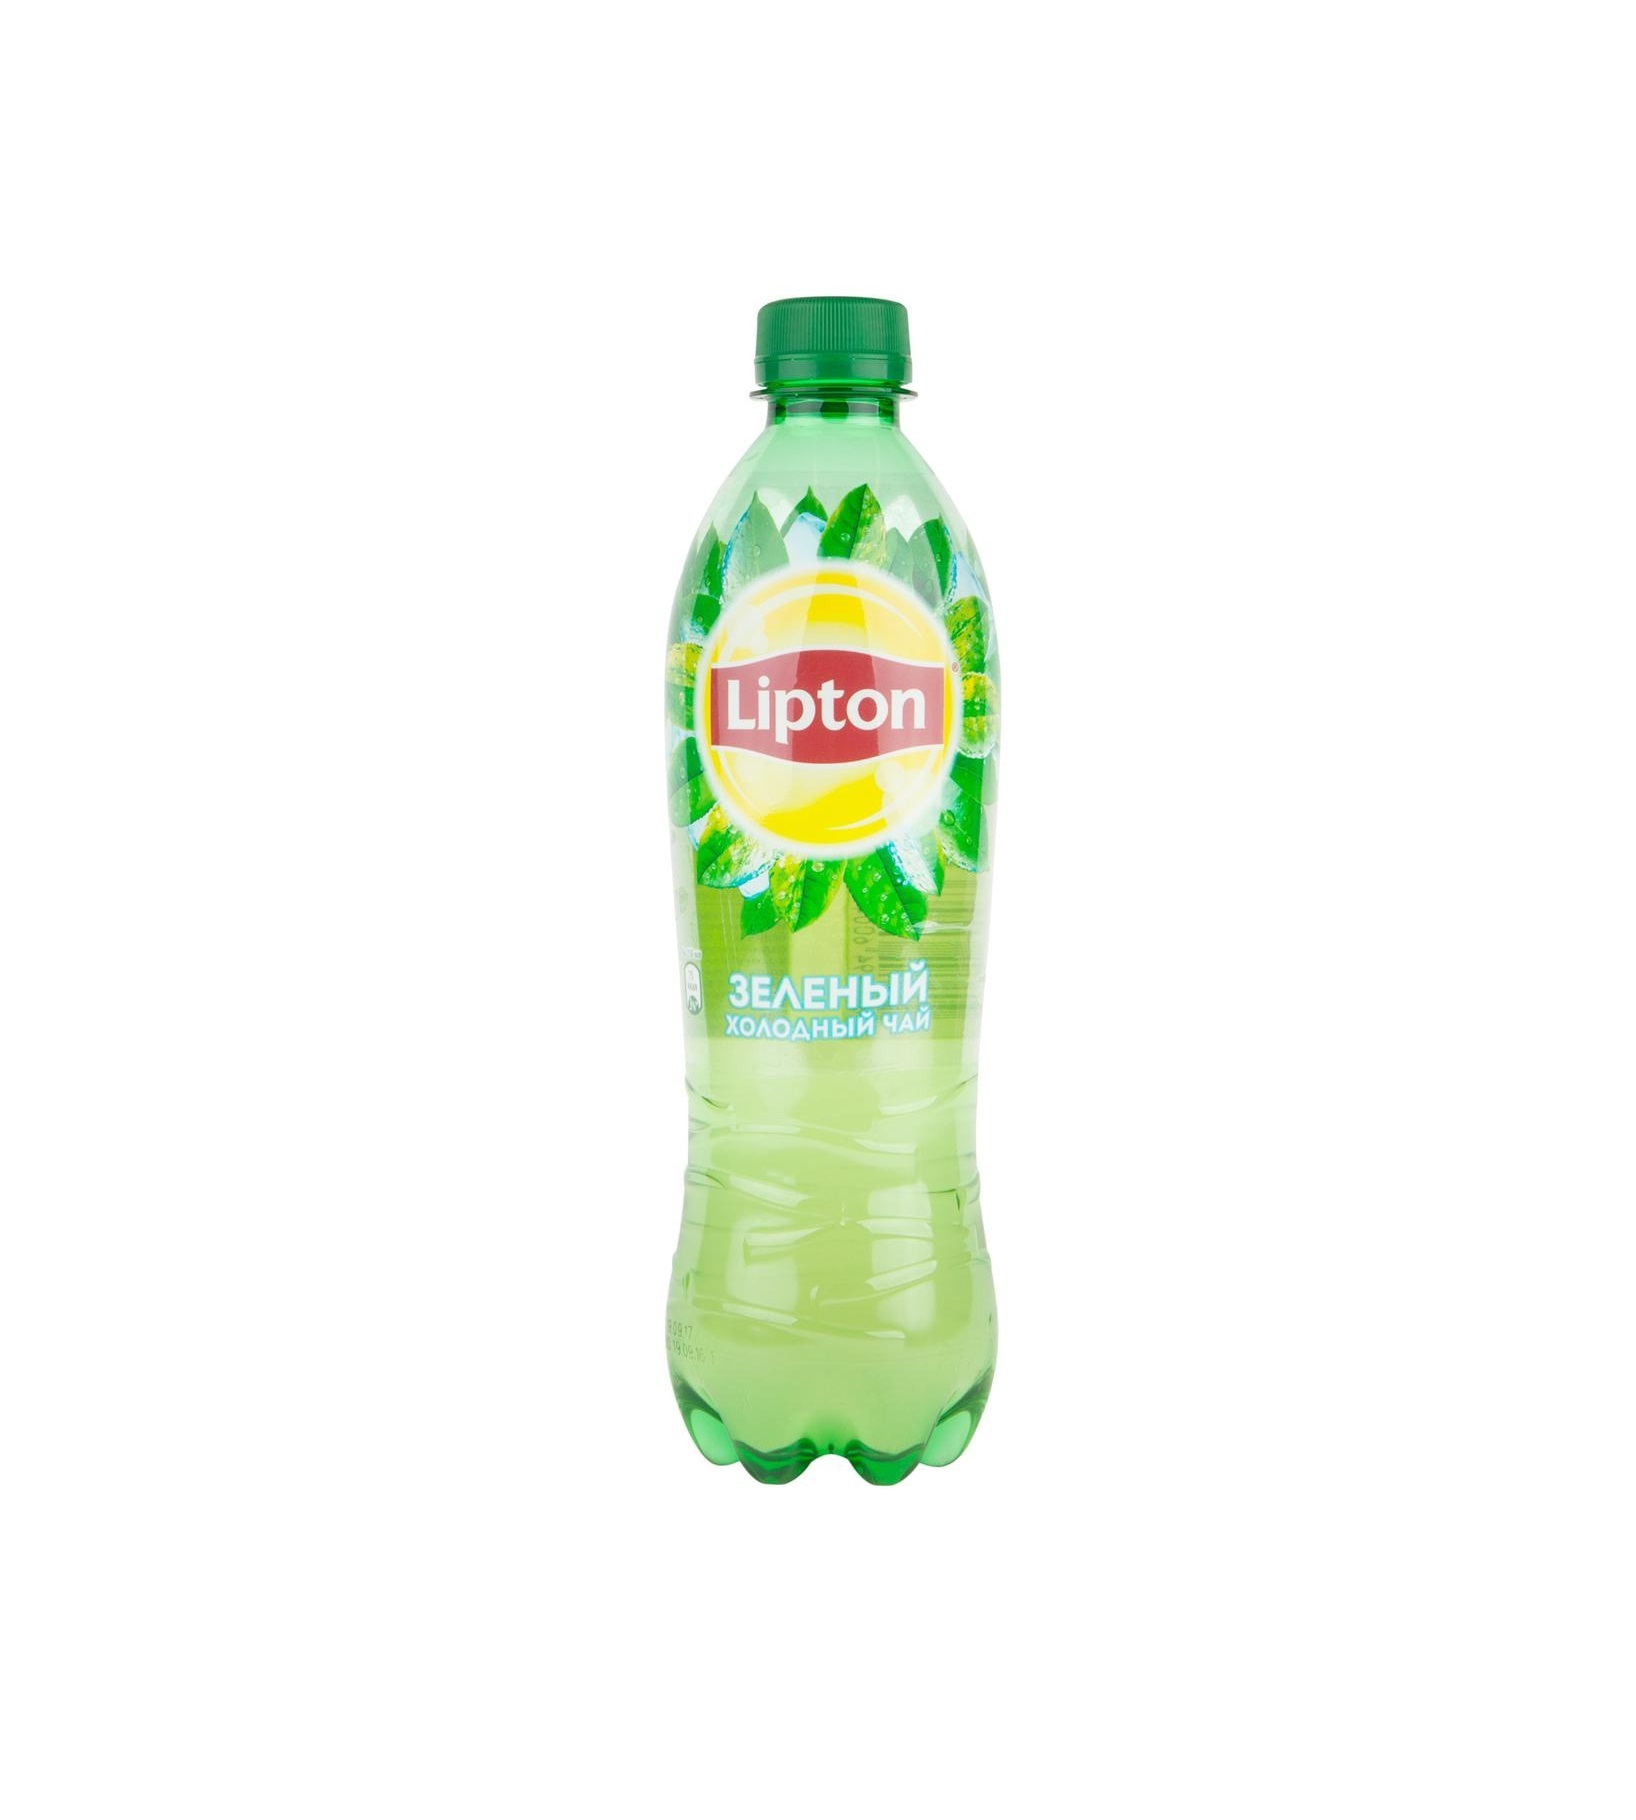 Бутылка зеленого липтона. Липтон 0,5 зеленый. Липтон 0,5 зелёный 0.5. Липтон зеленый 05. Липтон зел 0,5.